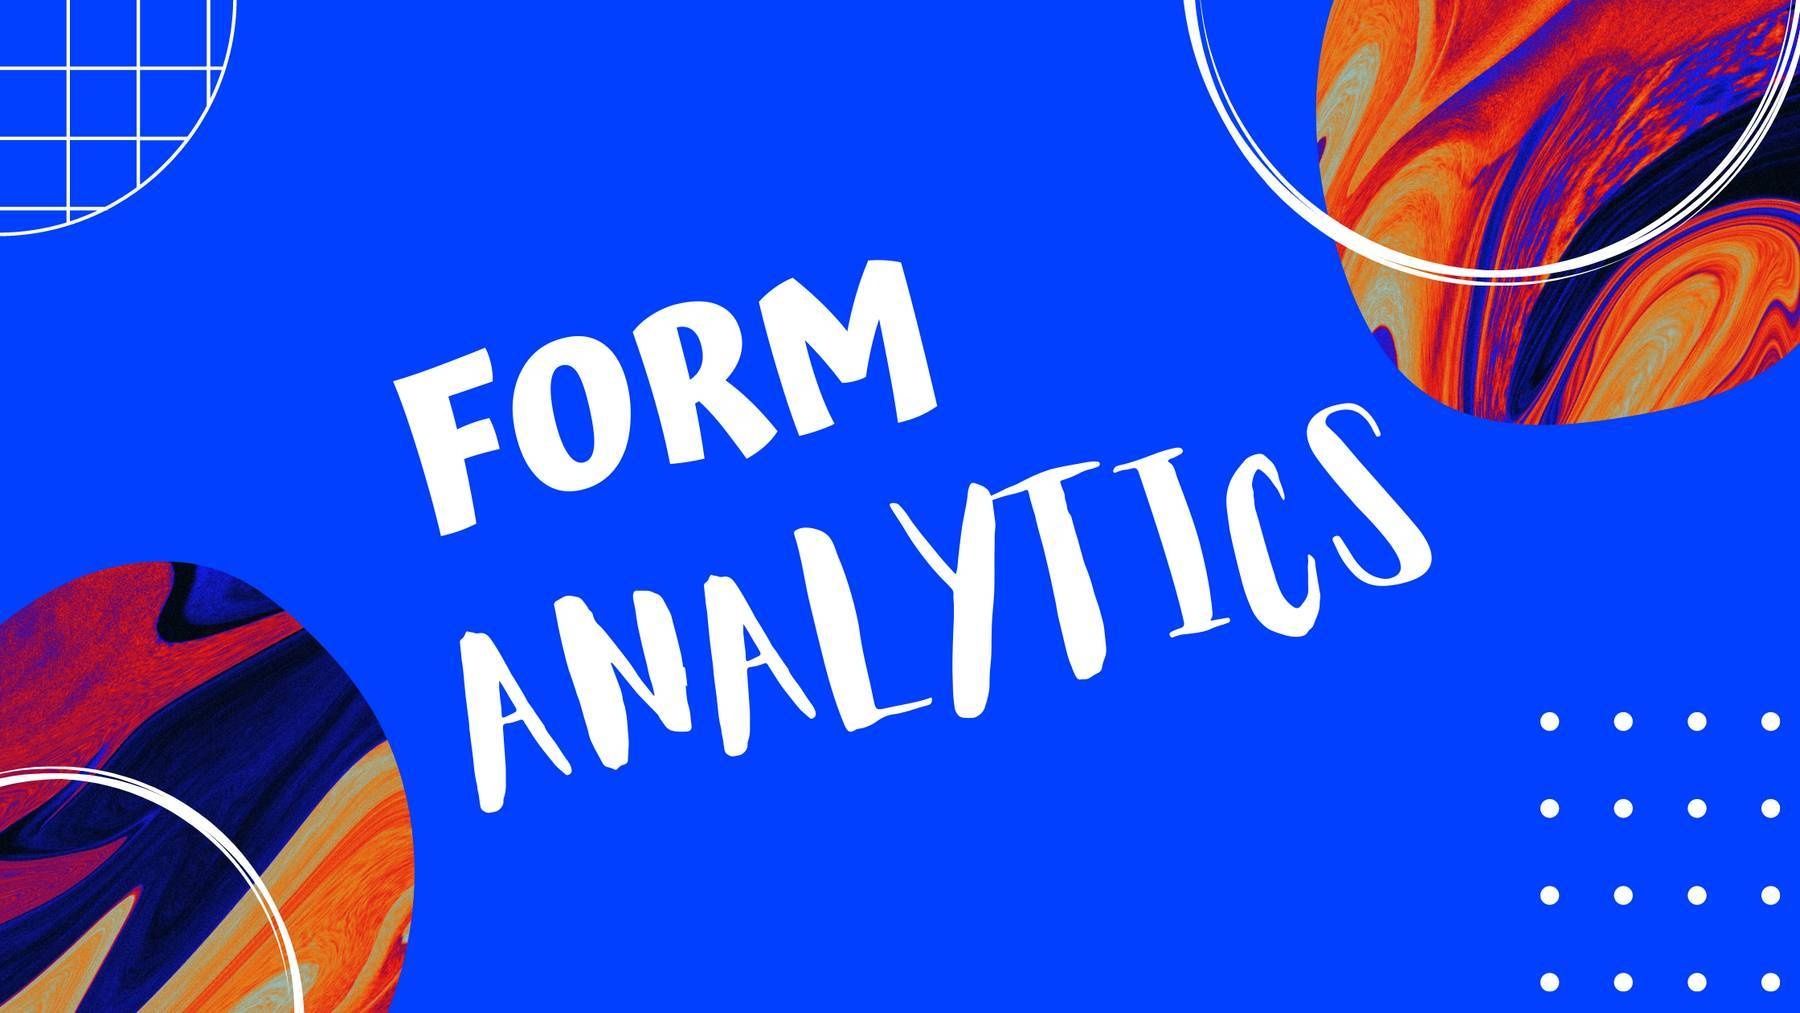 Form analytics